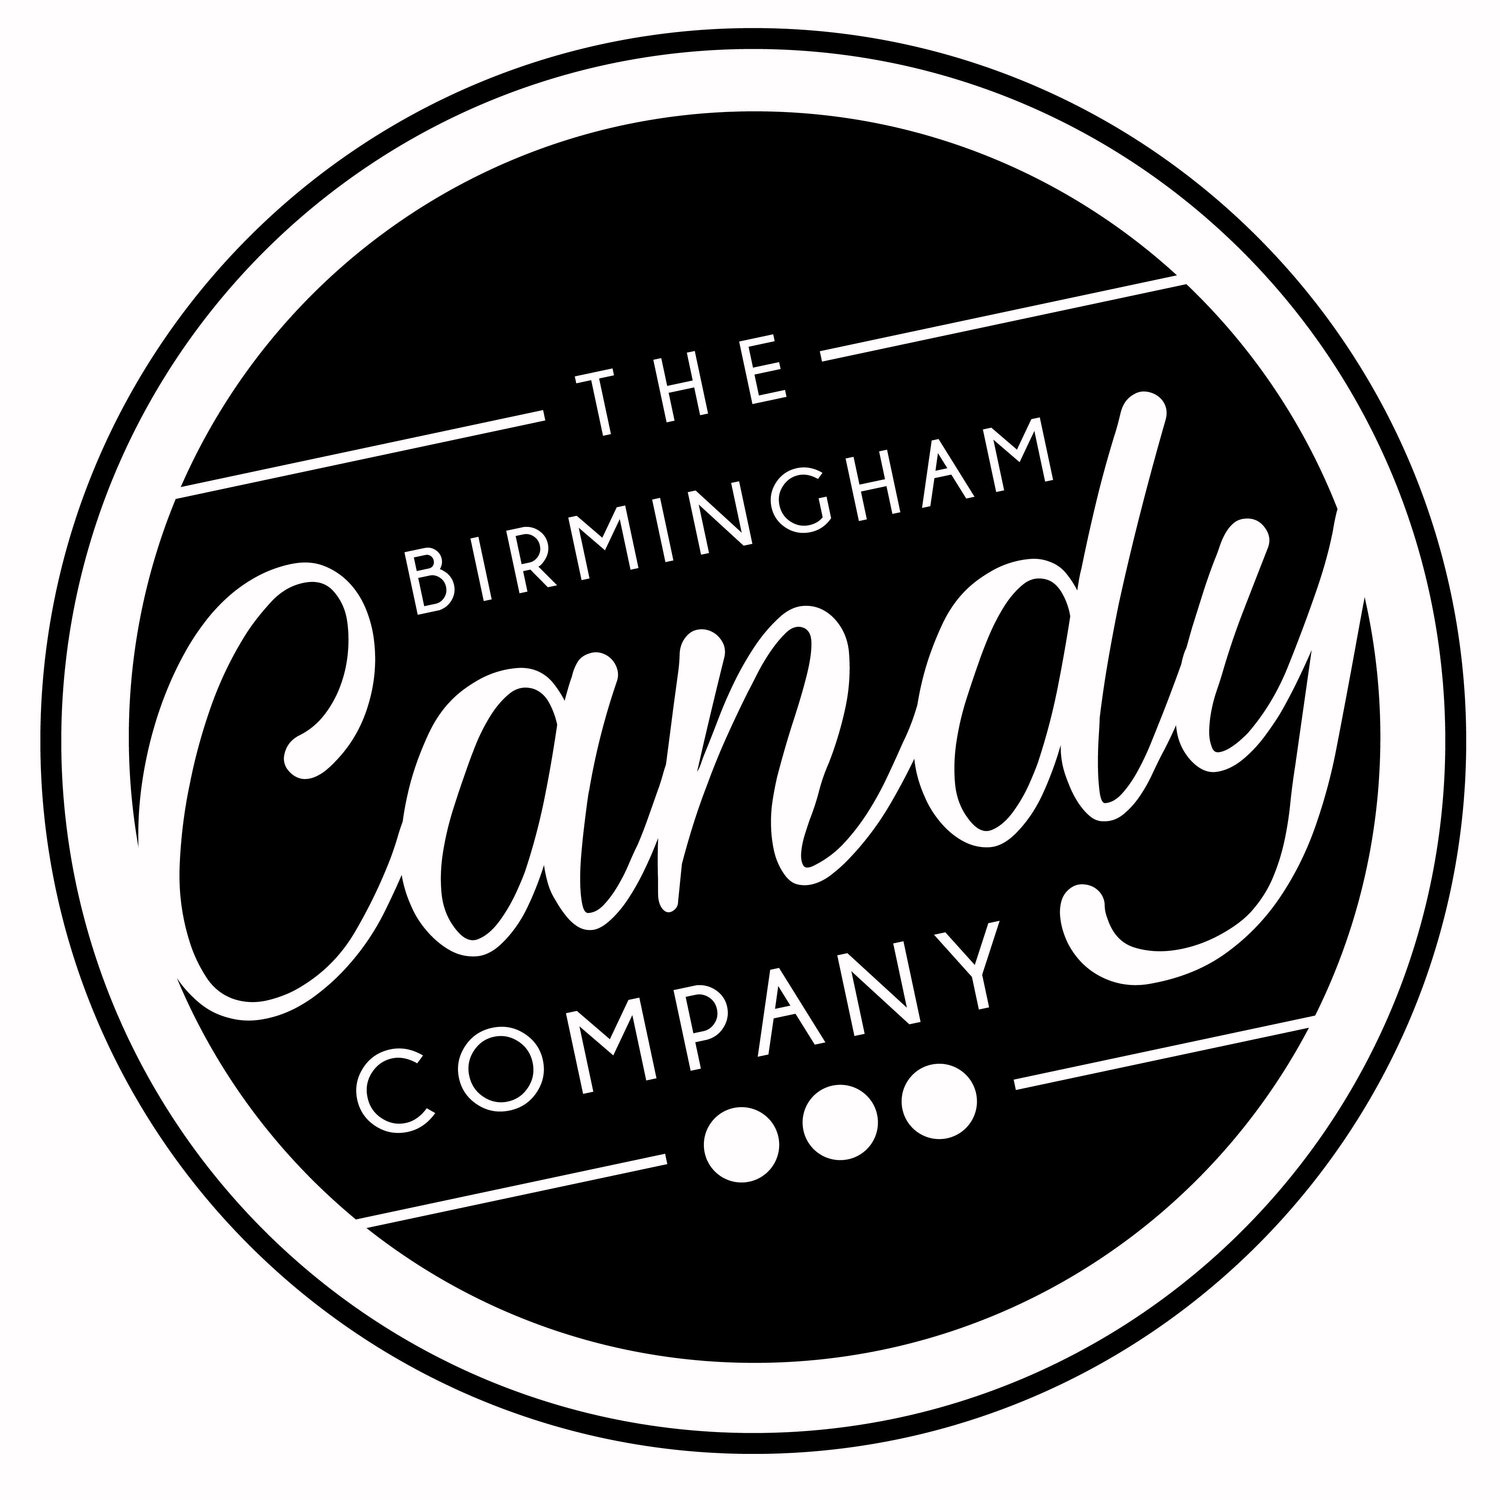 The Birmingham Candy Company